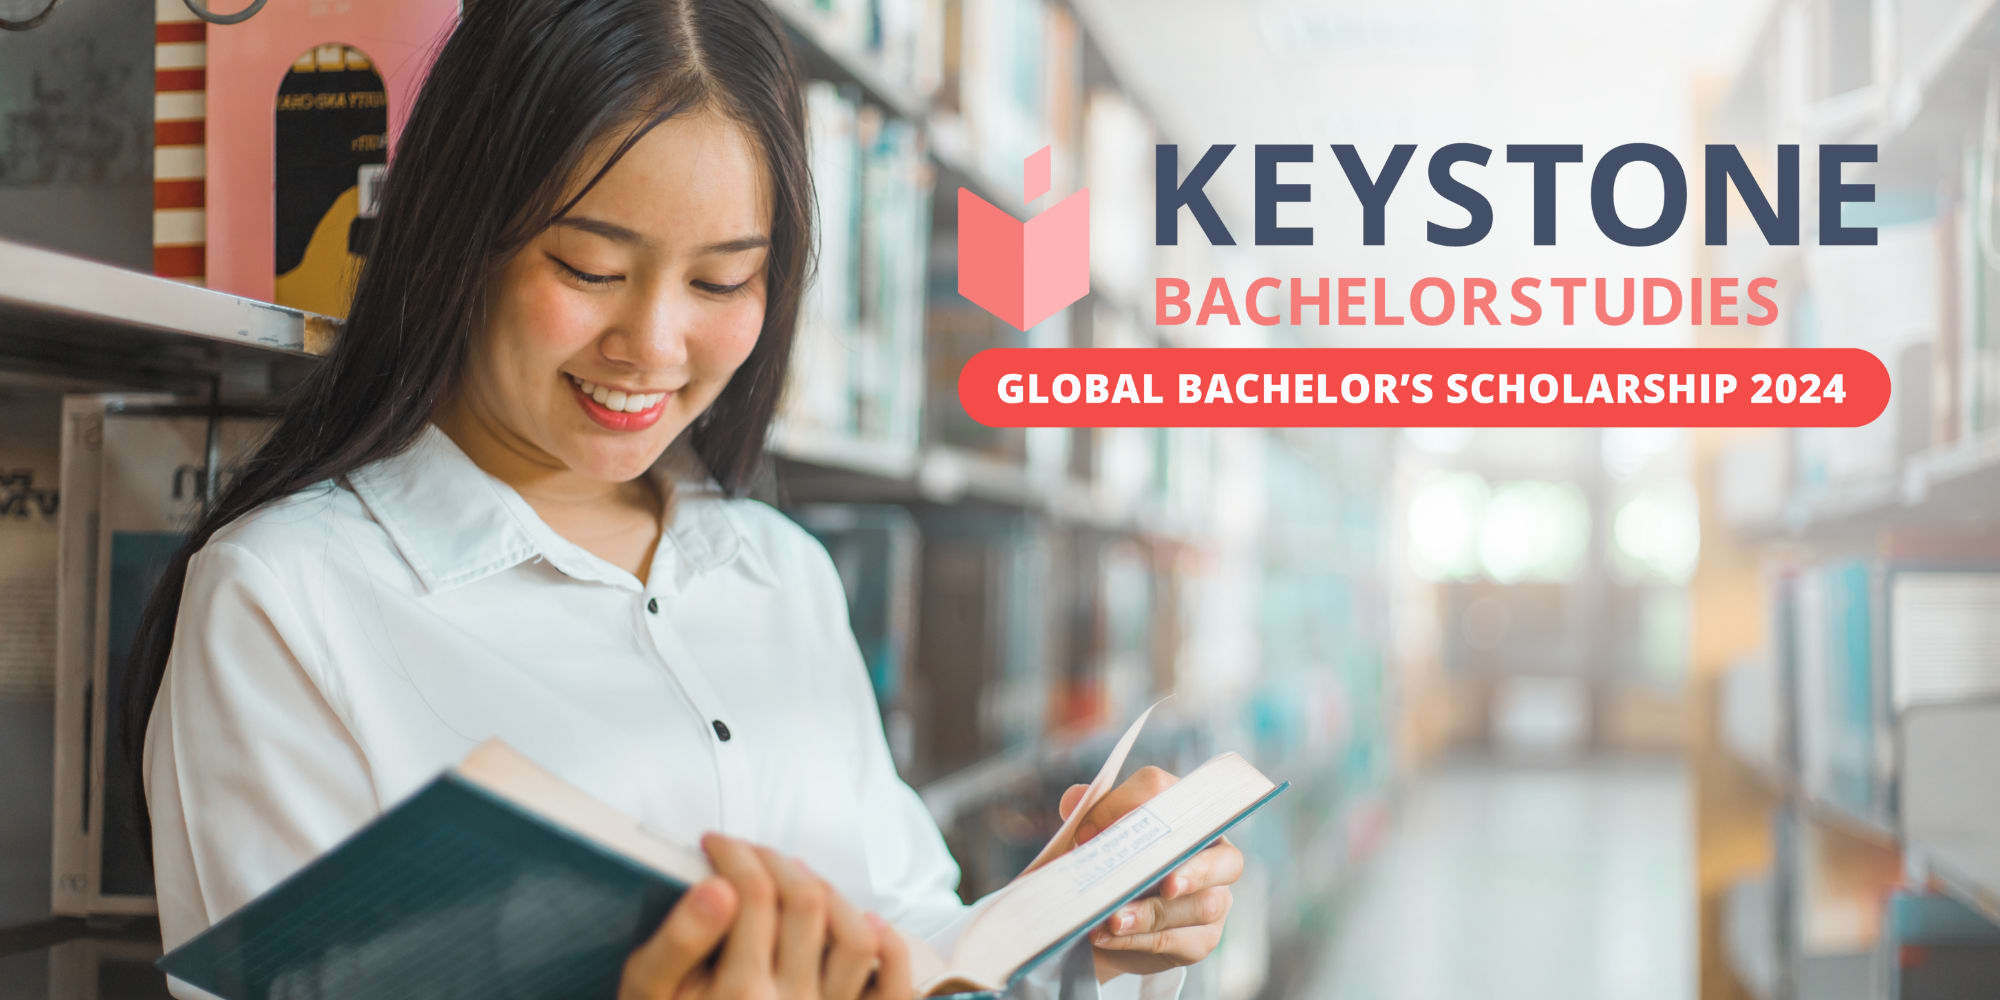 Global bachelors scholarships 2024